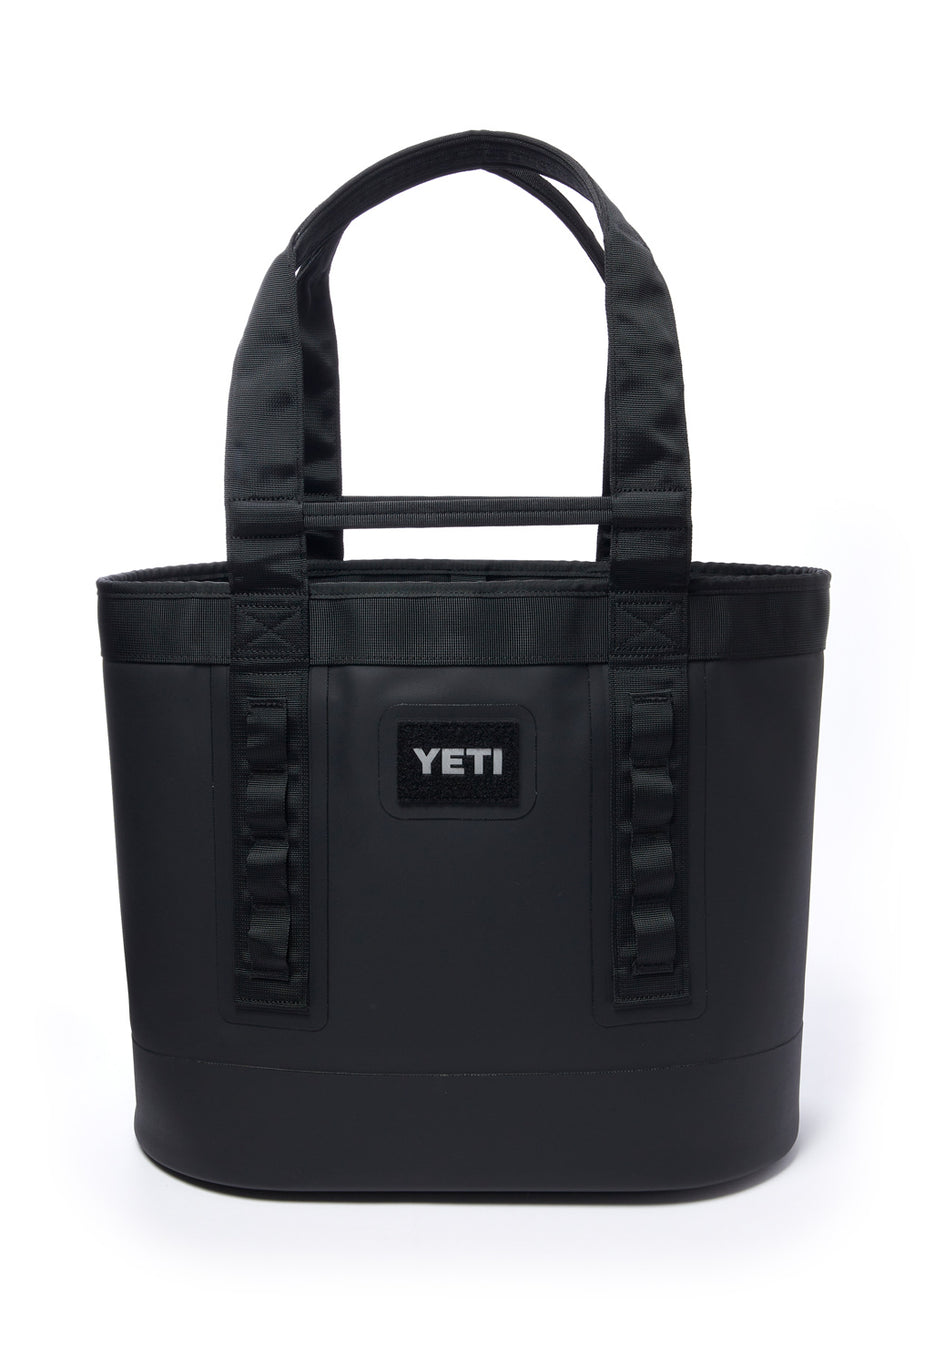 YETI® Black Rambler 12 oz. Bottle with HotShot Cap